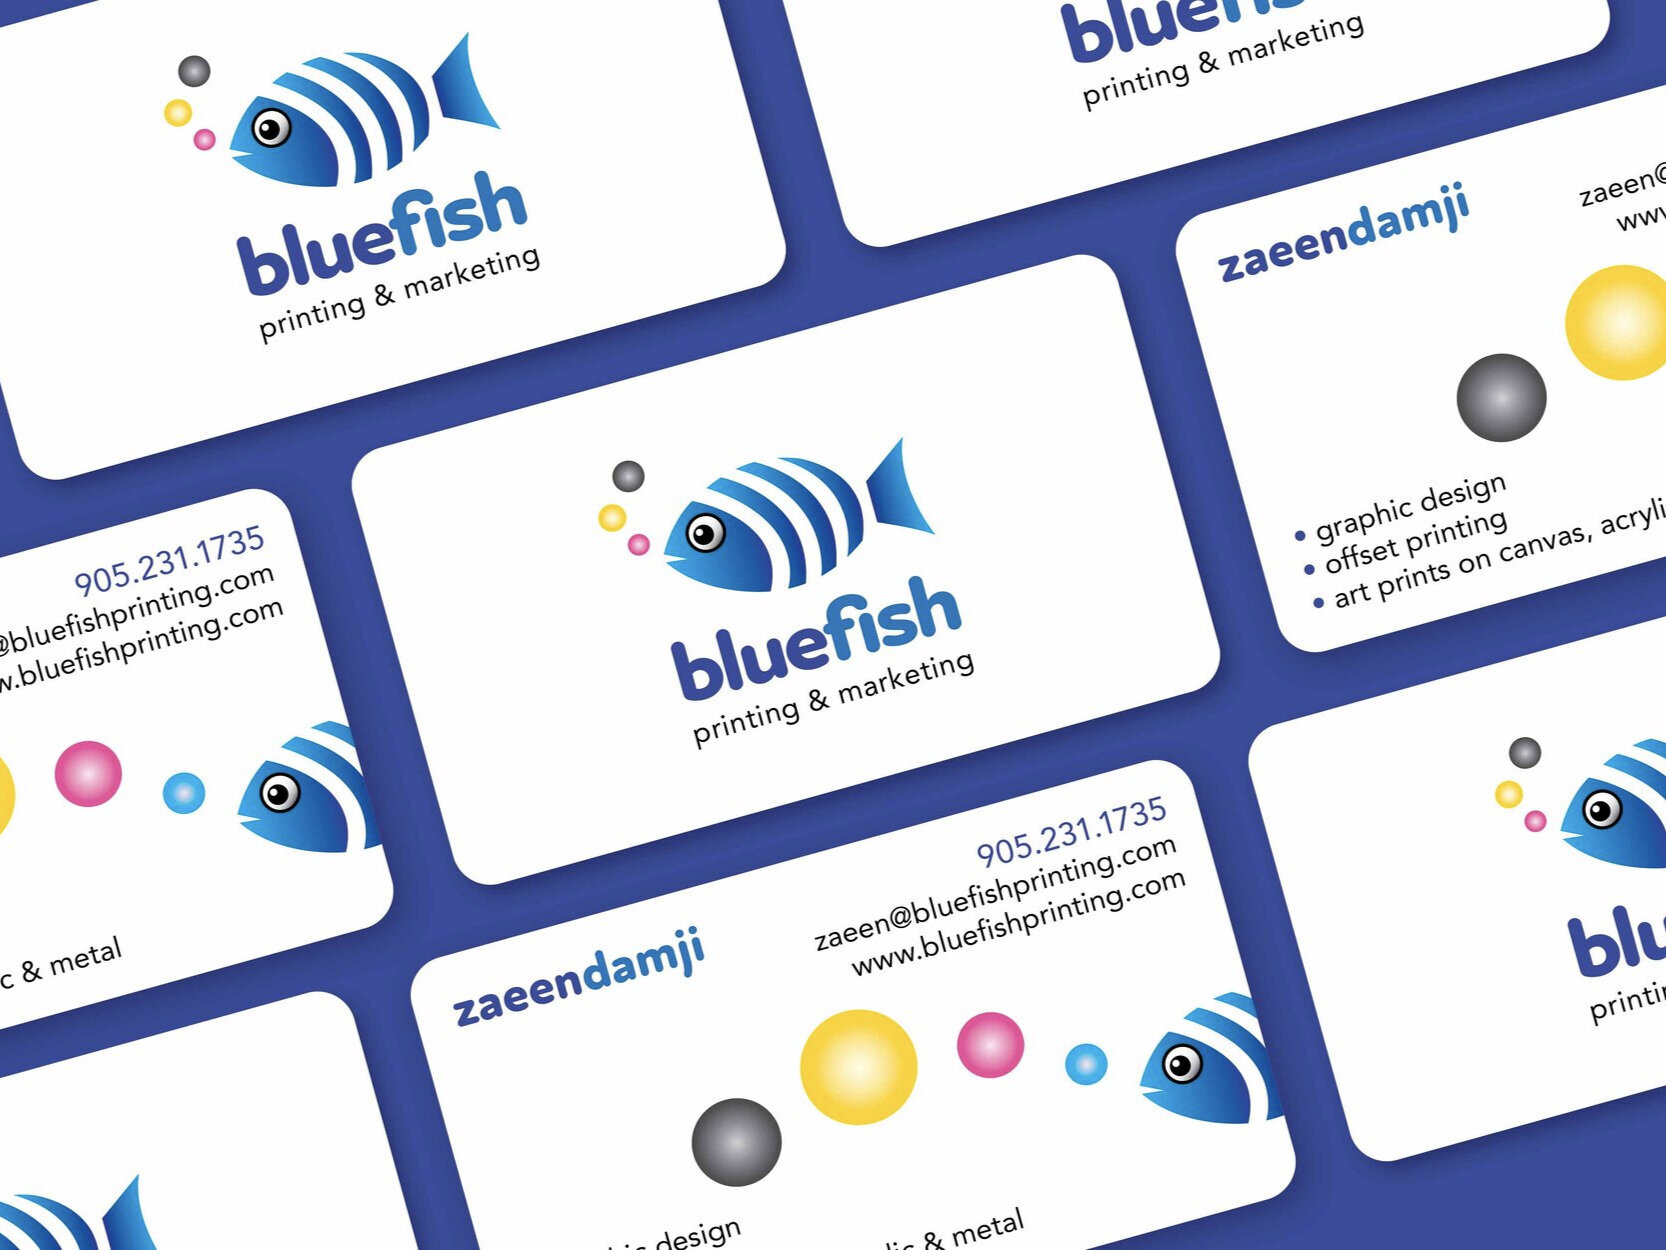 Blue Fish Printing &amp; Marketing